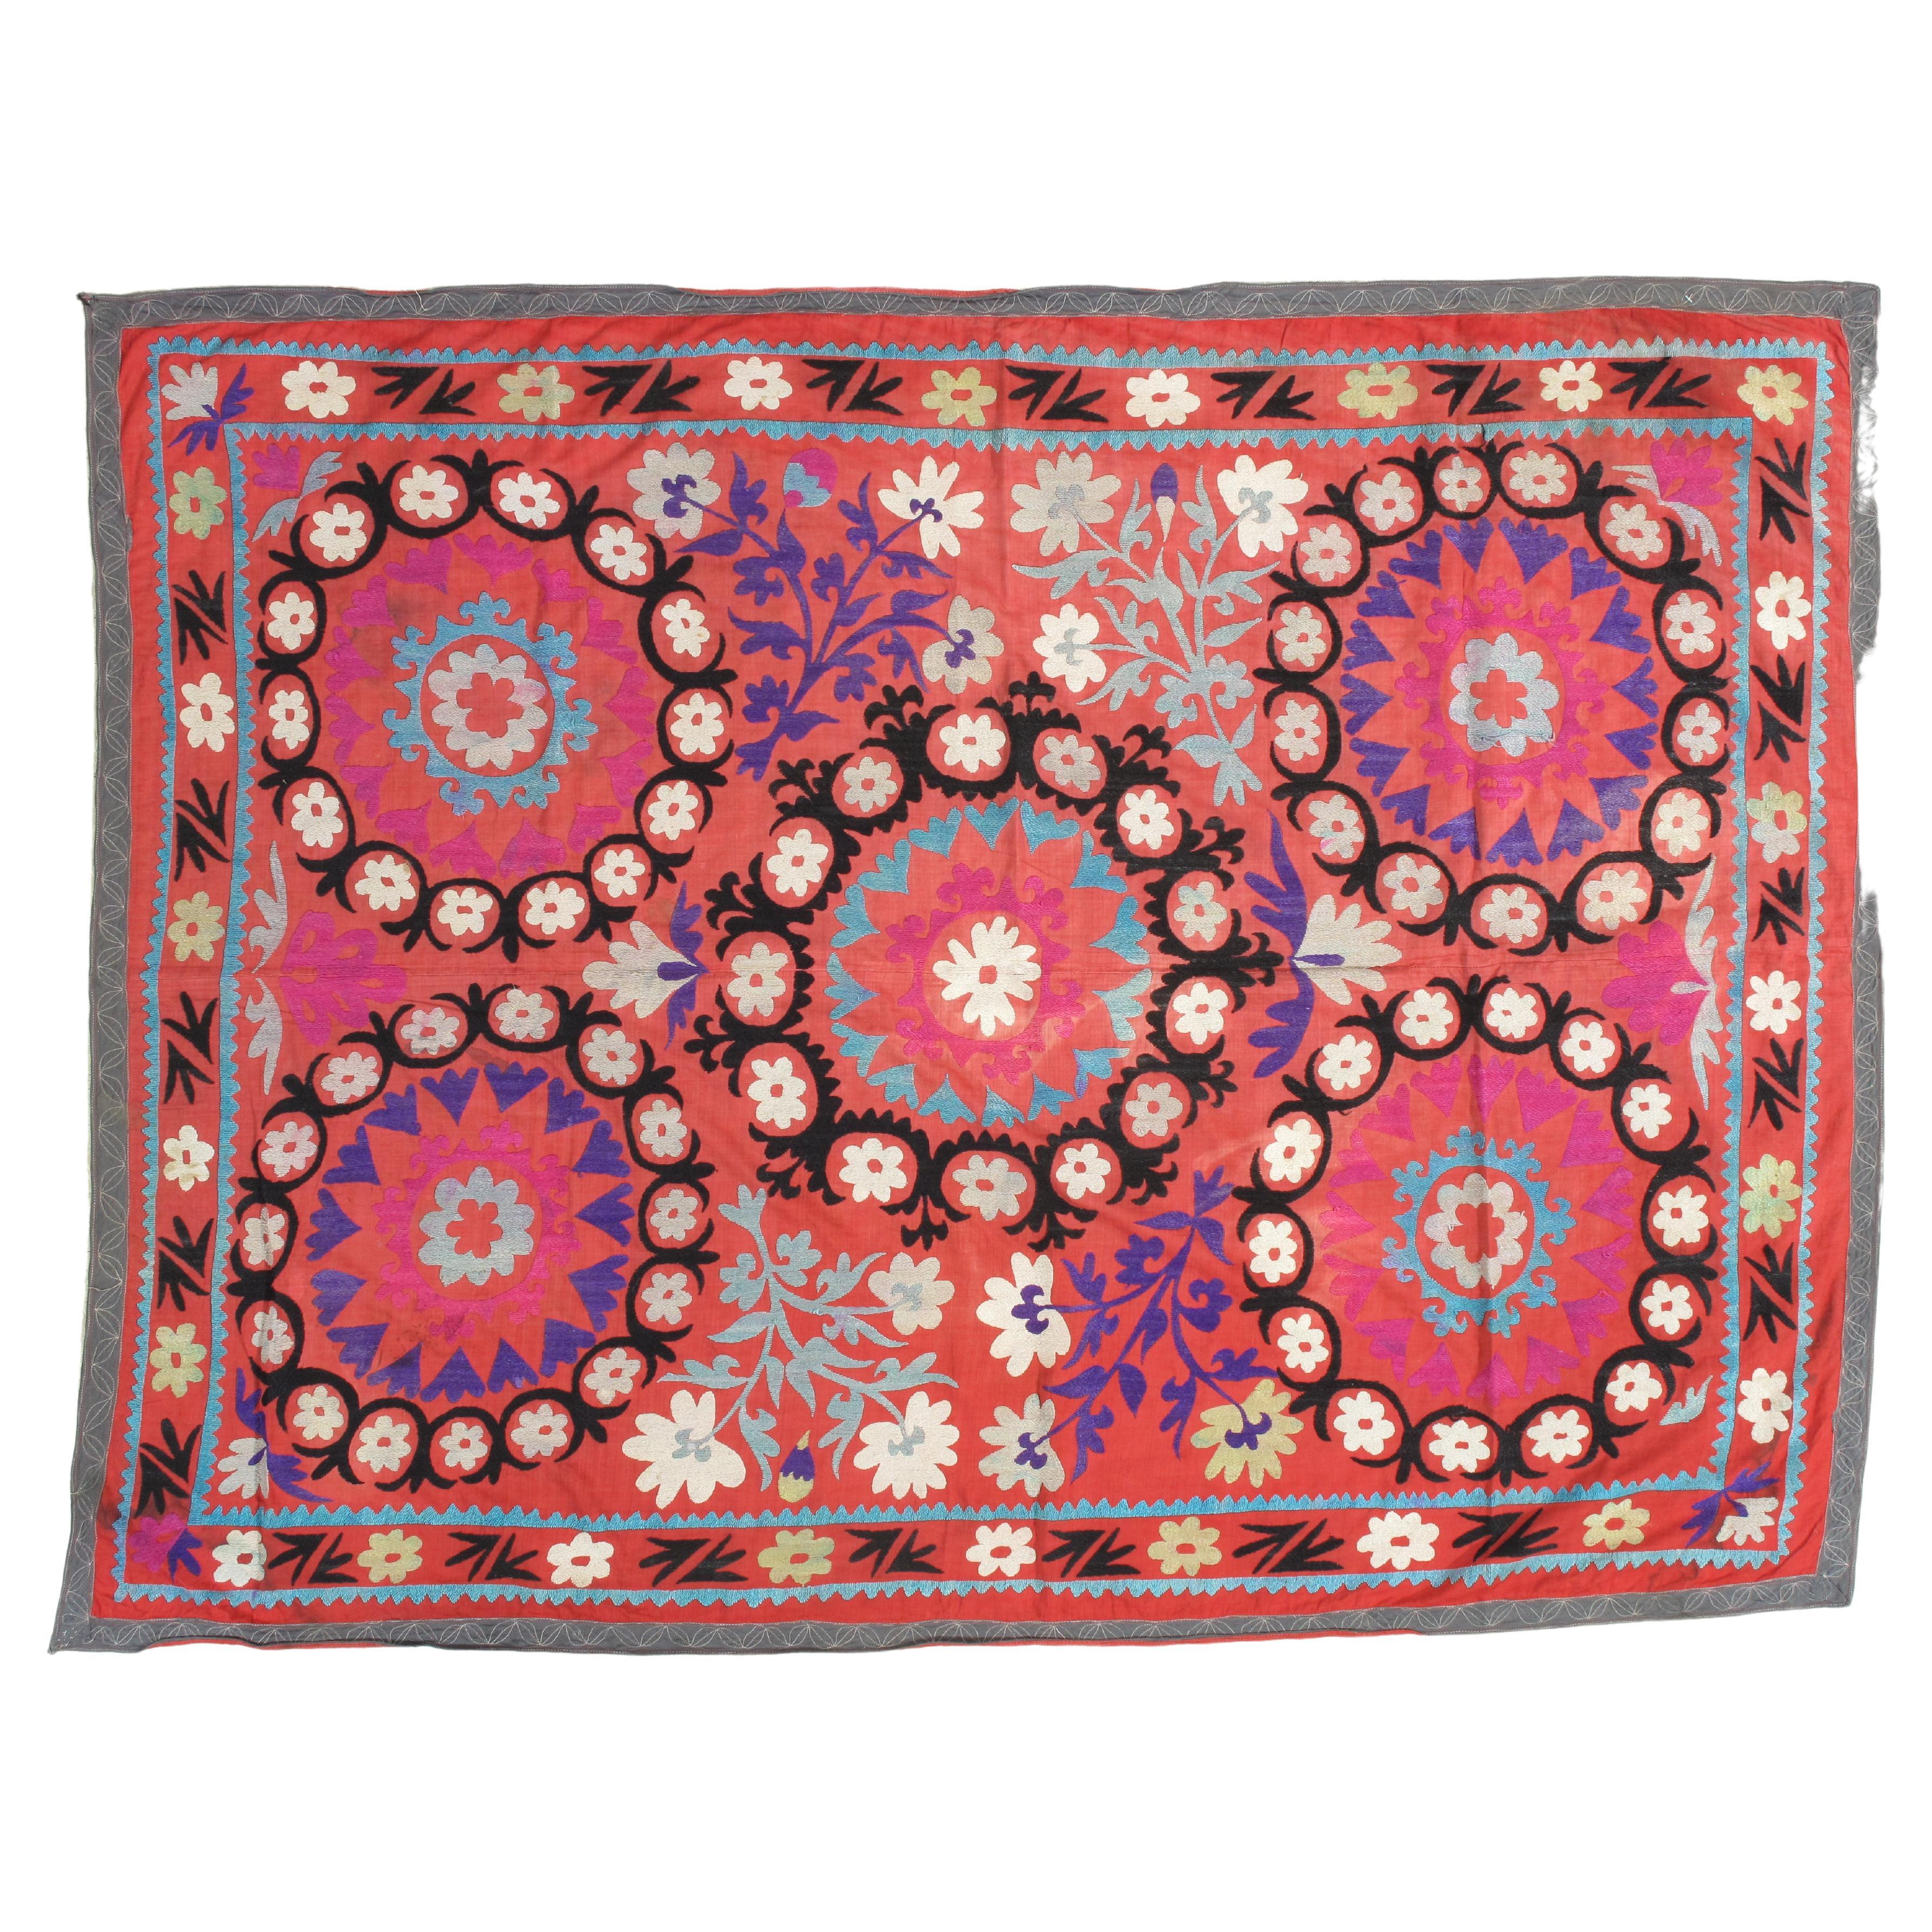 Late 20th Century Suzani Style Textile, Vibrant Pink, Geometric Pattern